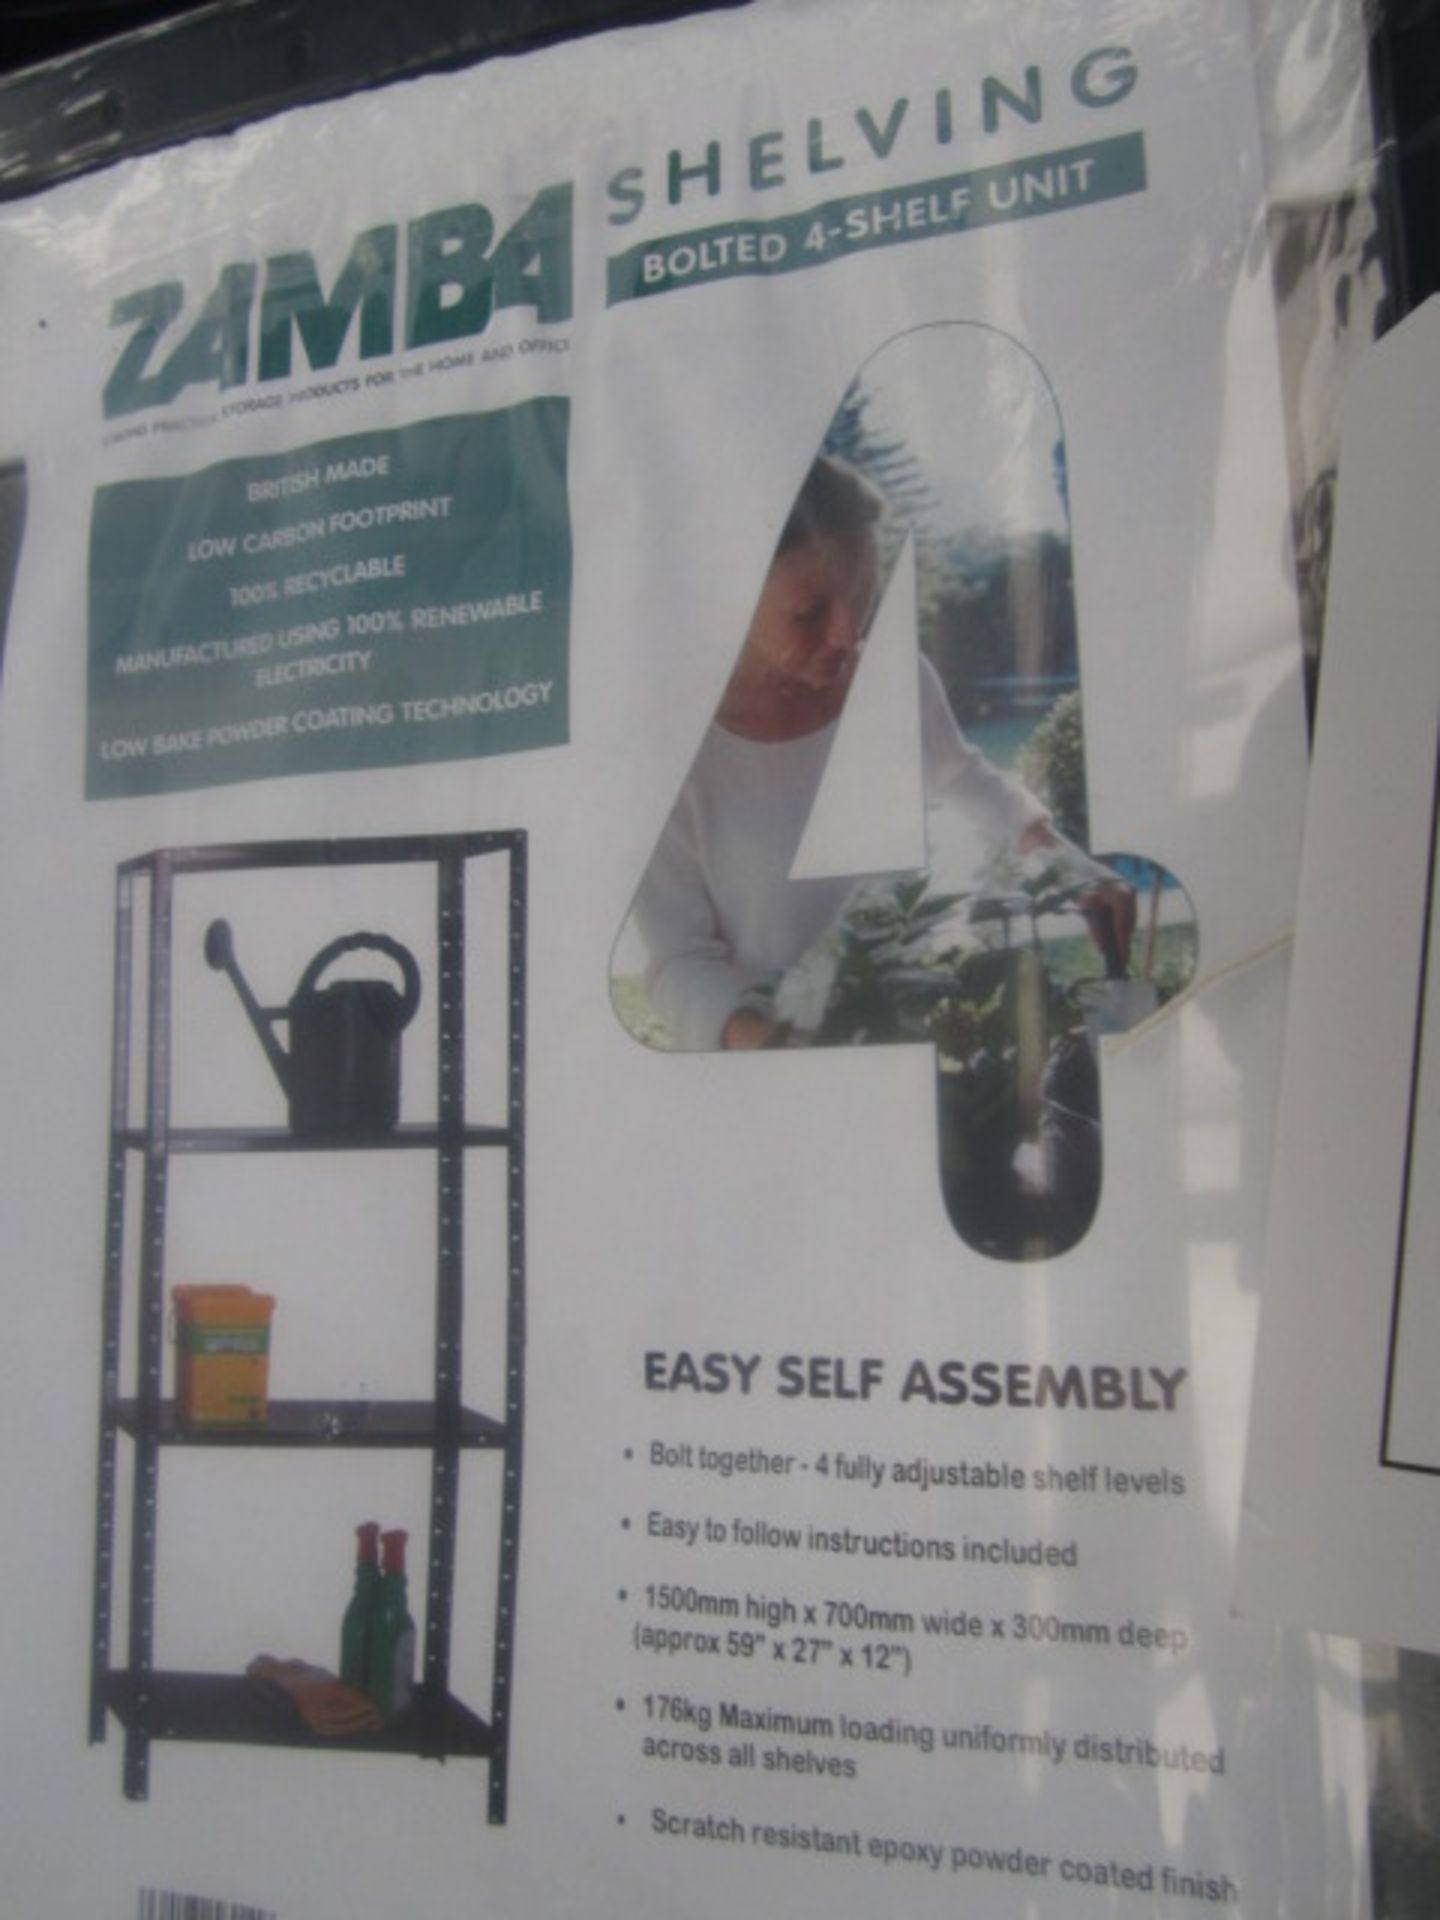 8 x packs Zamba bolted 4 shelf unit, width: 700mm x depth: 300mm x height: 1500mm - Image 2 of 2